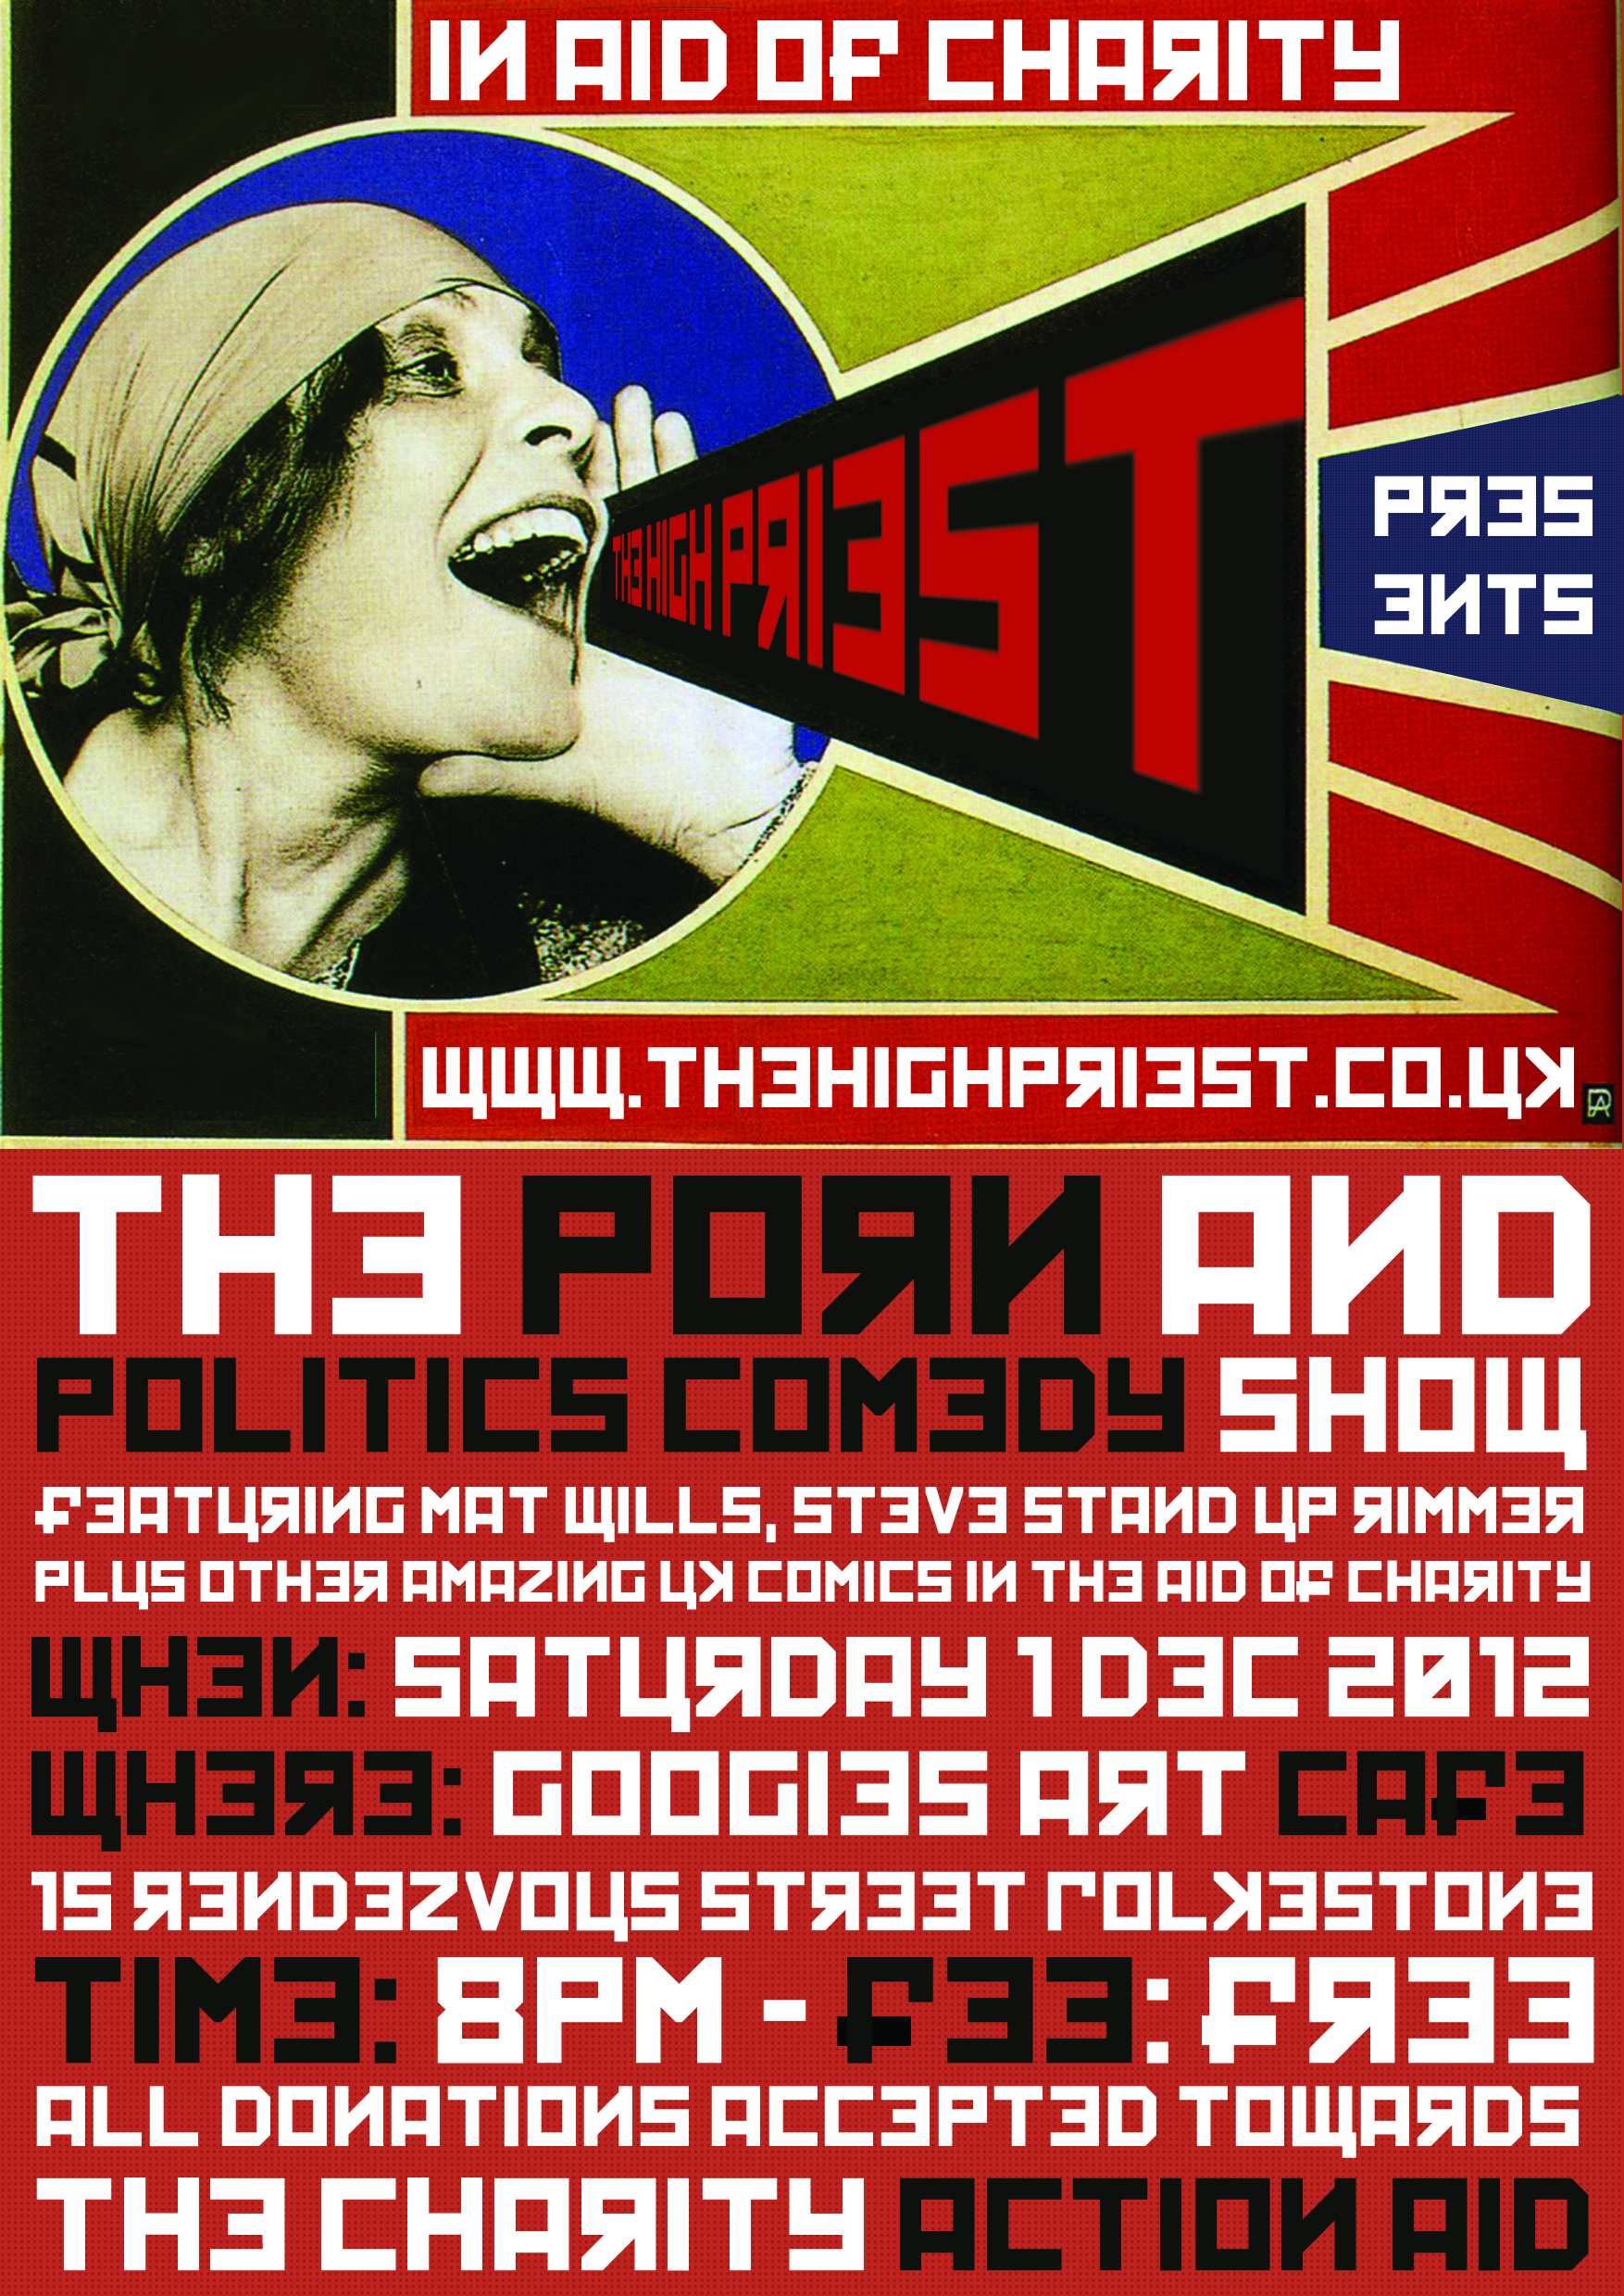 The High Priest 'Porn and Politics' comedy gig show poster